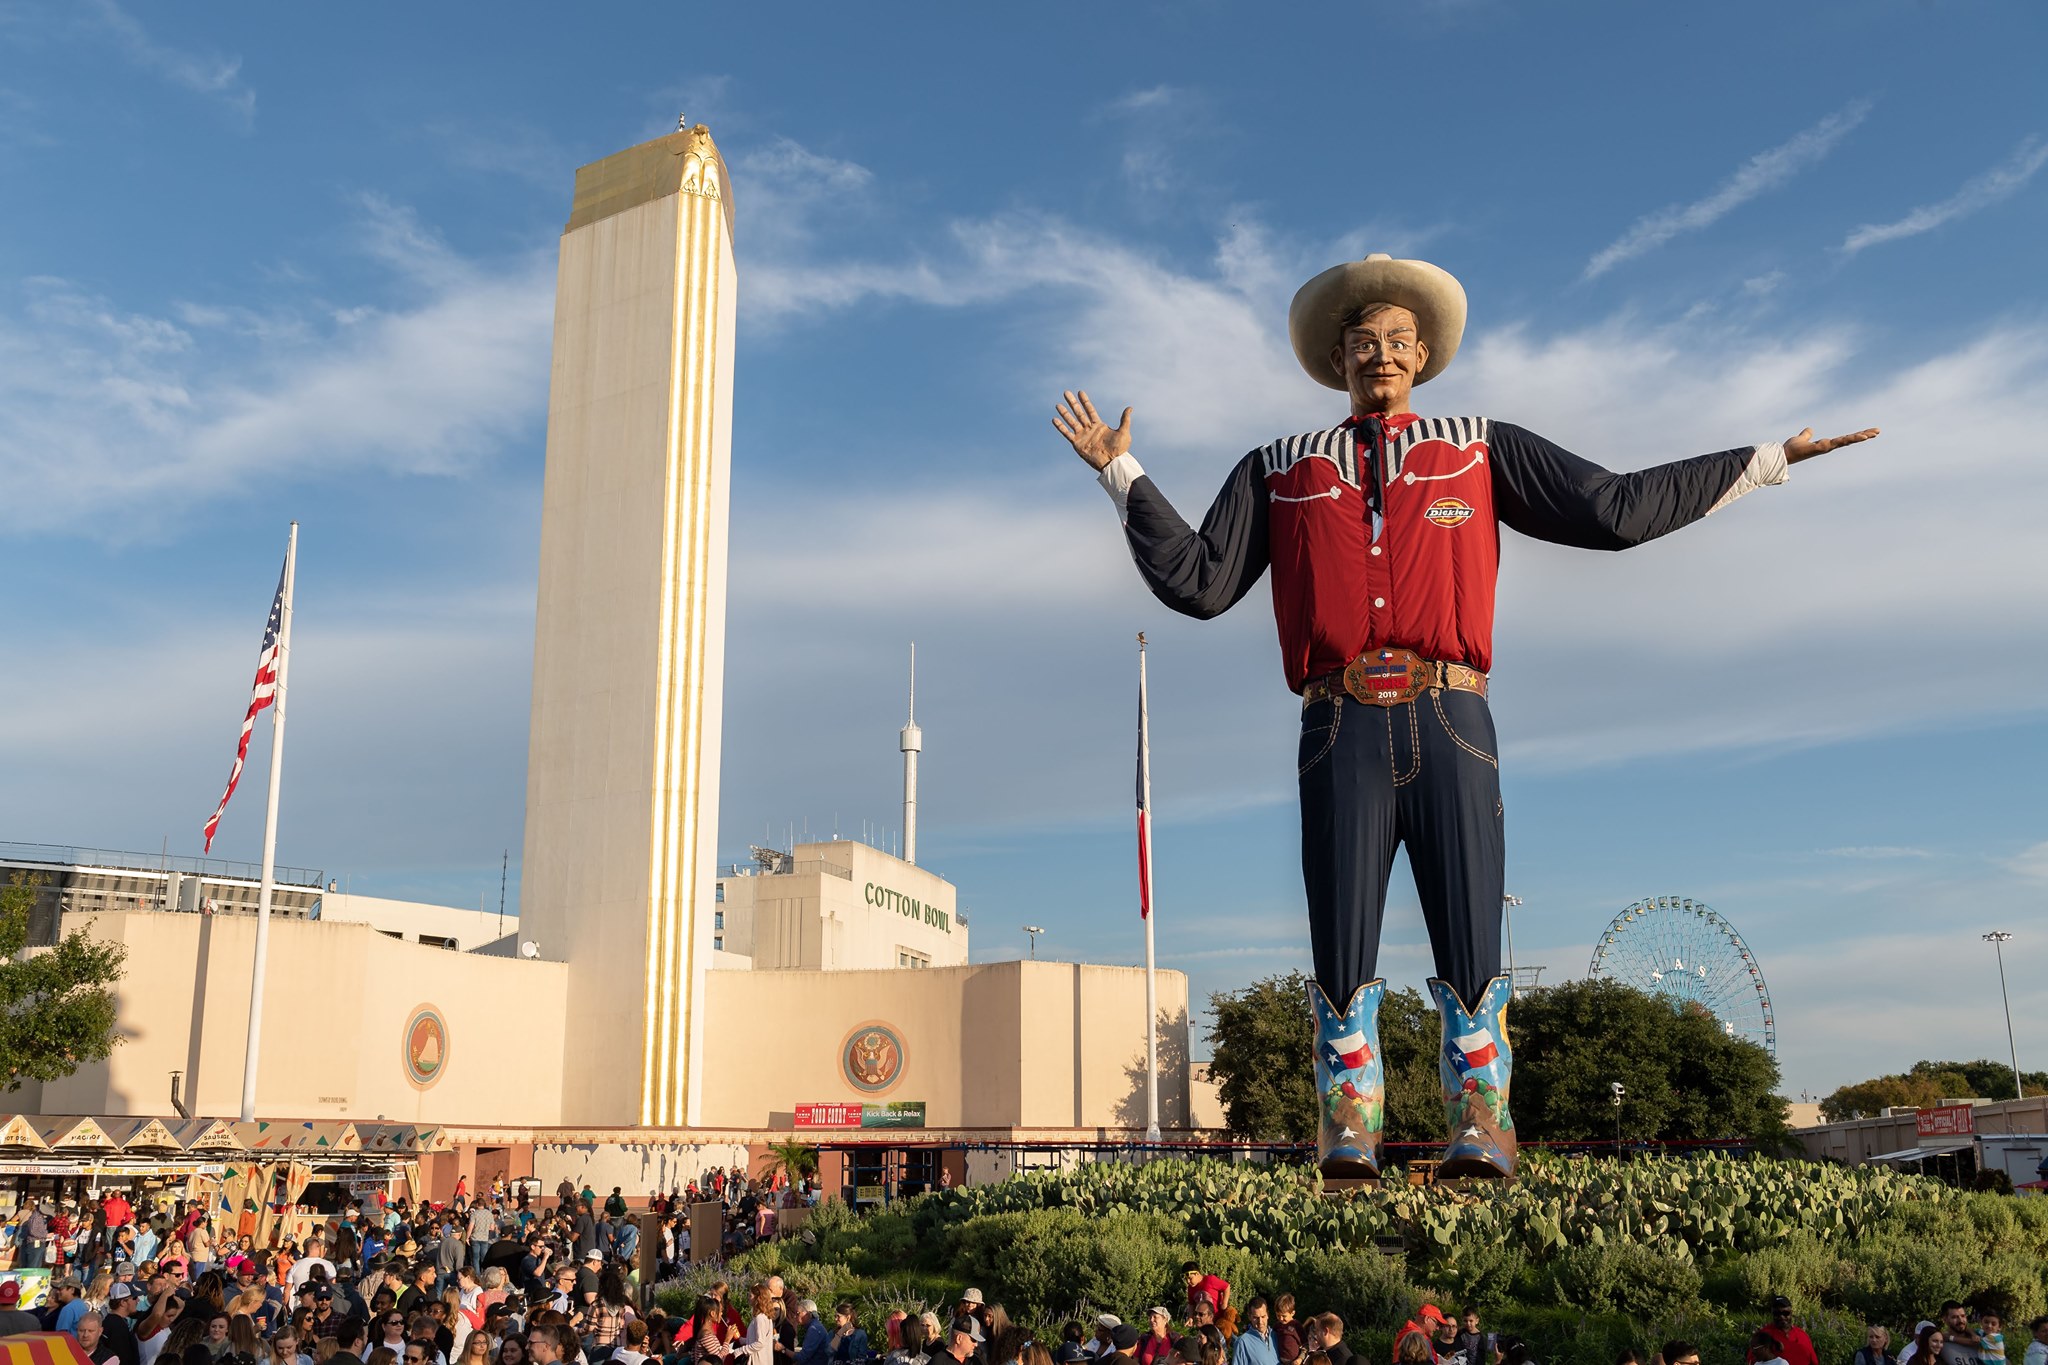 State Fair Of Texas To Return For 2021 In September